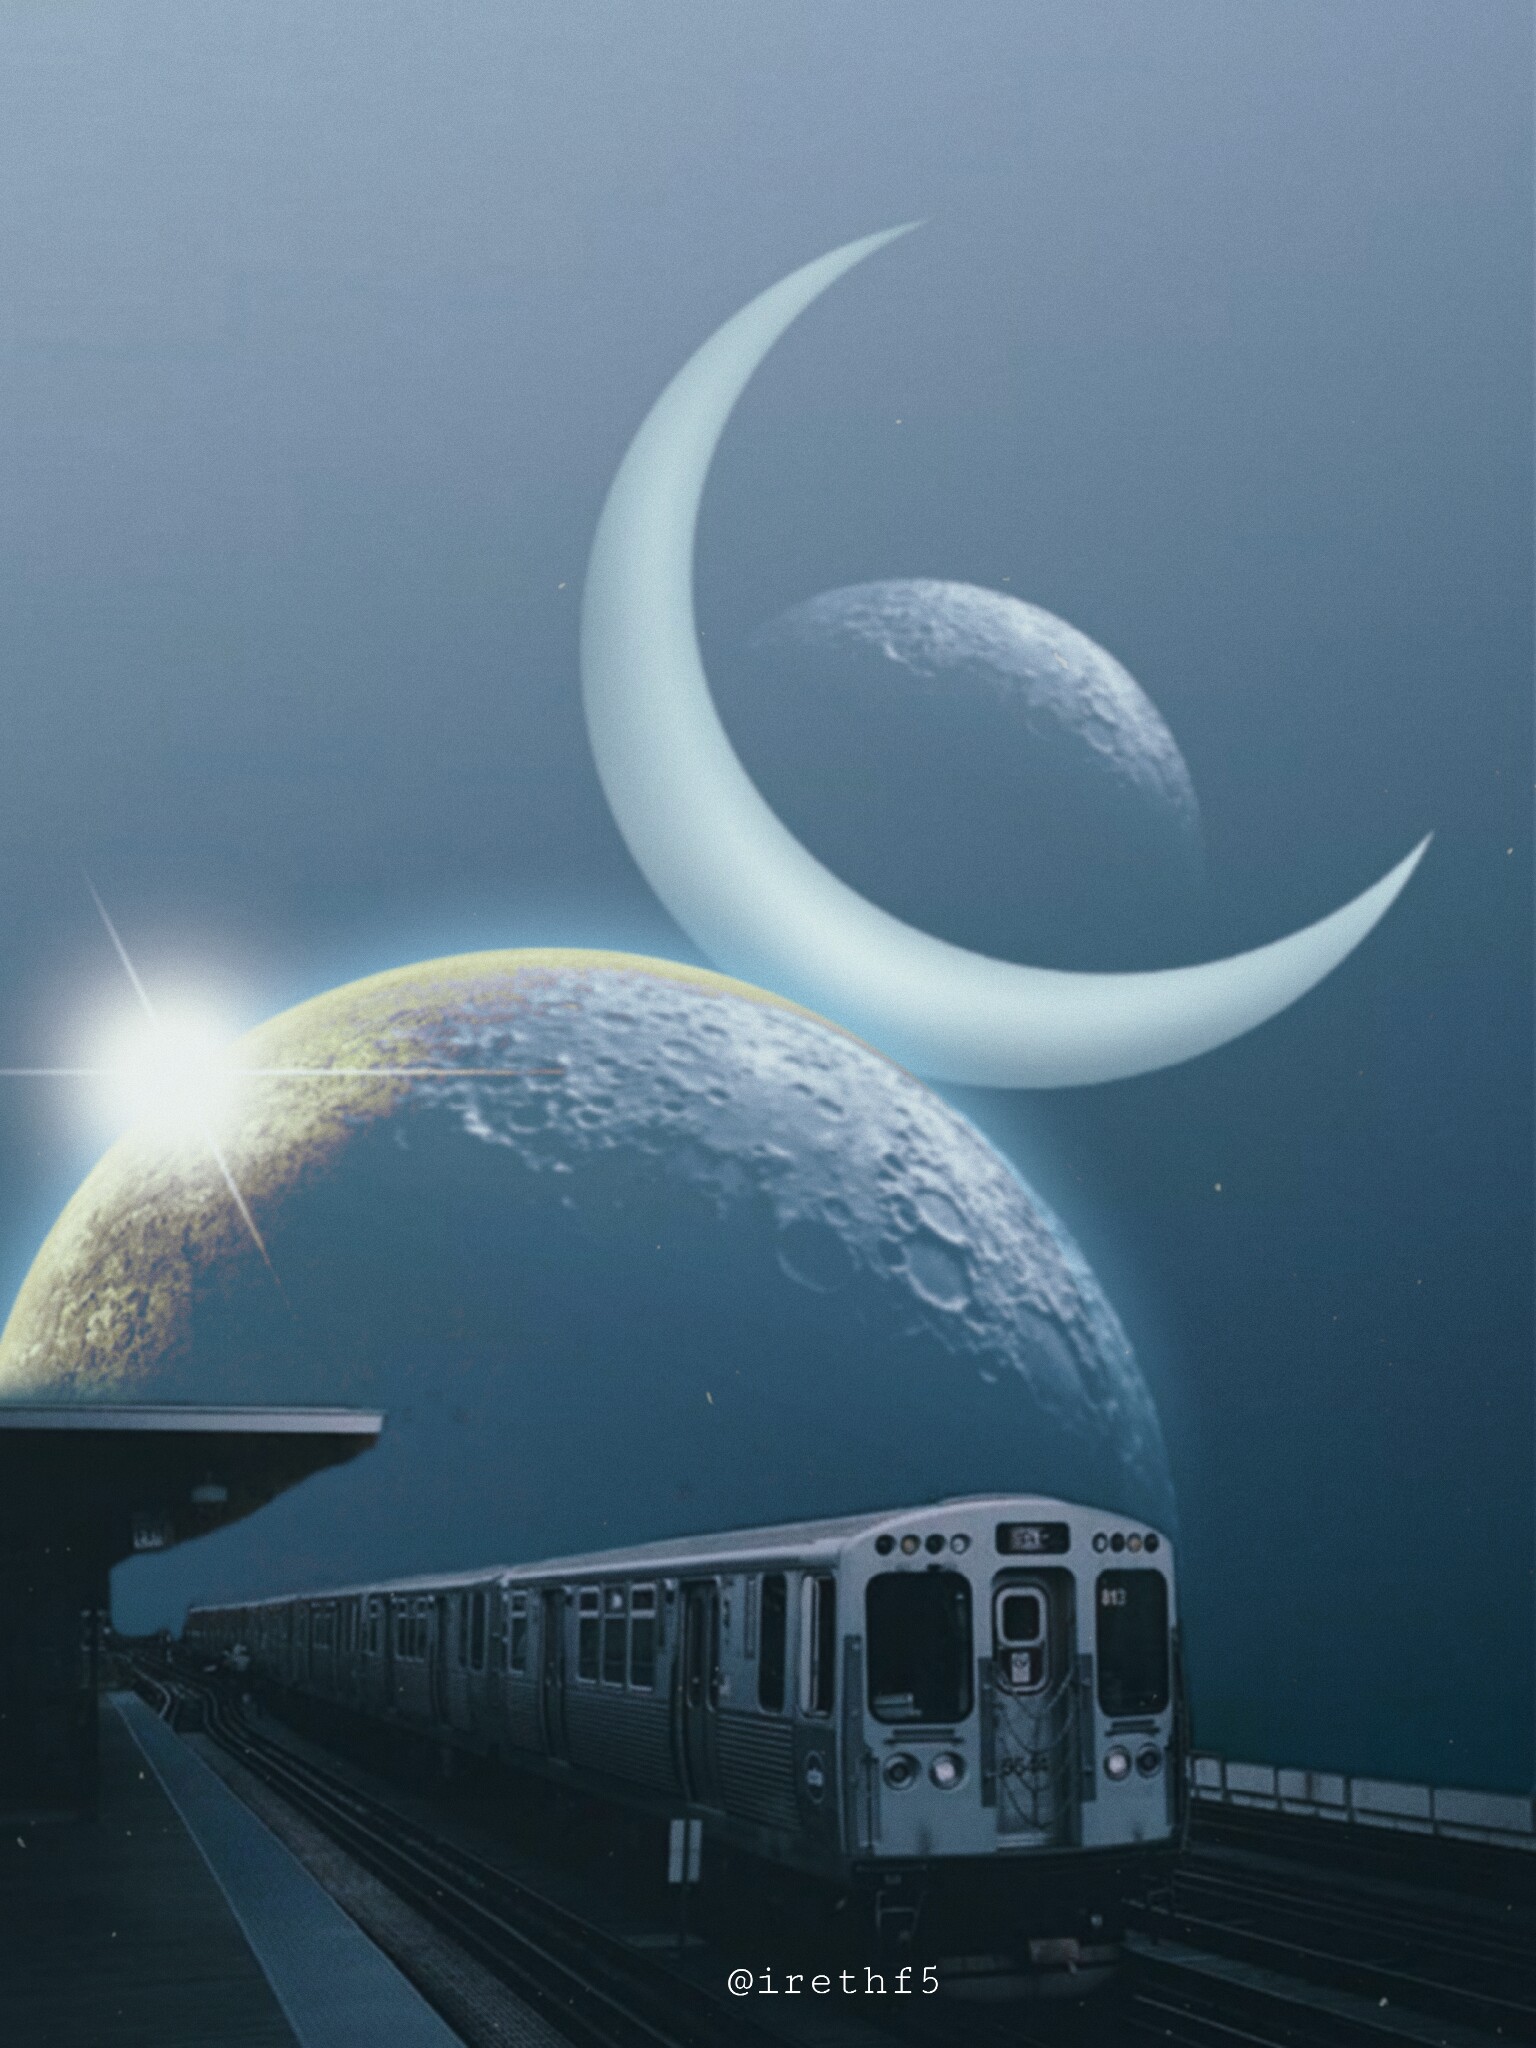 freetoedit train moon planet surreal @irethf5...